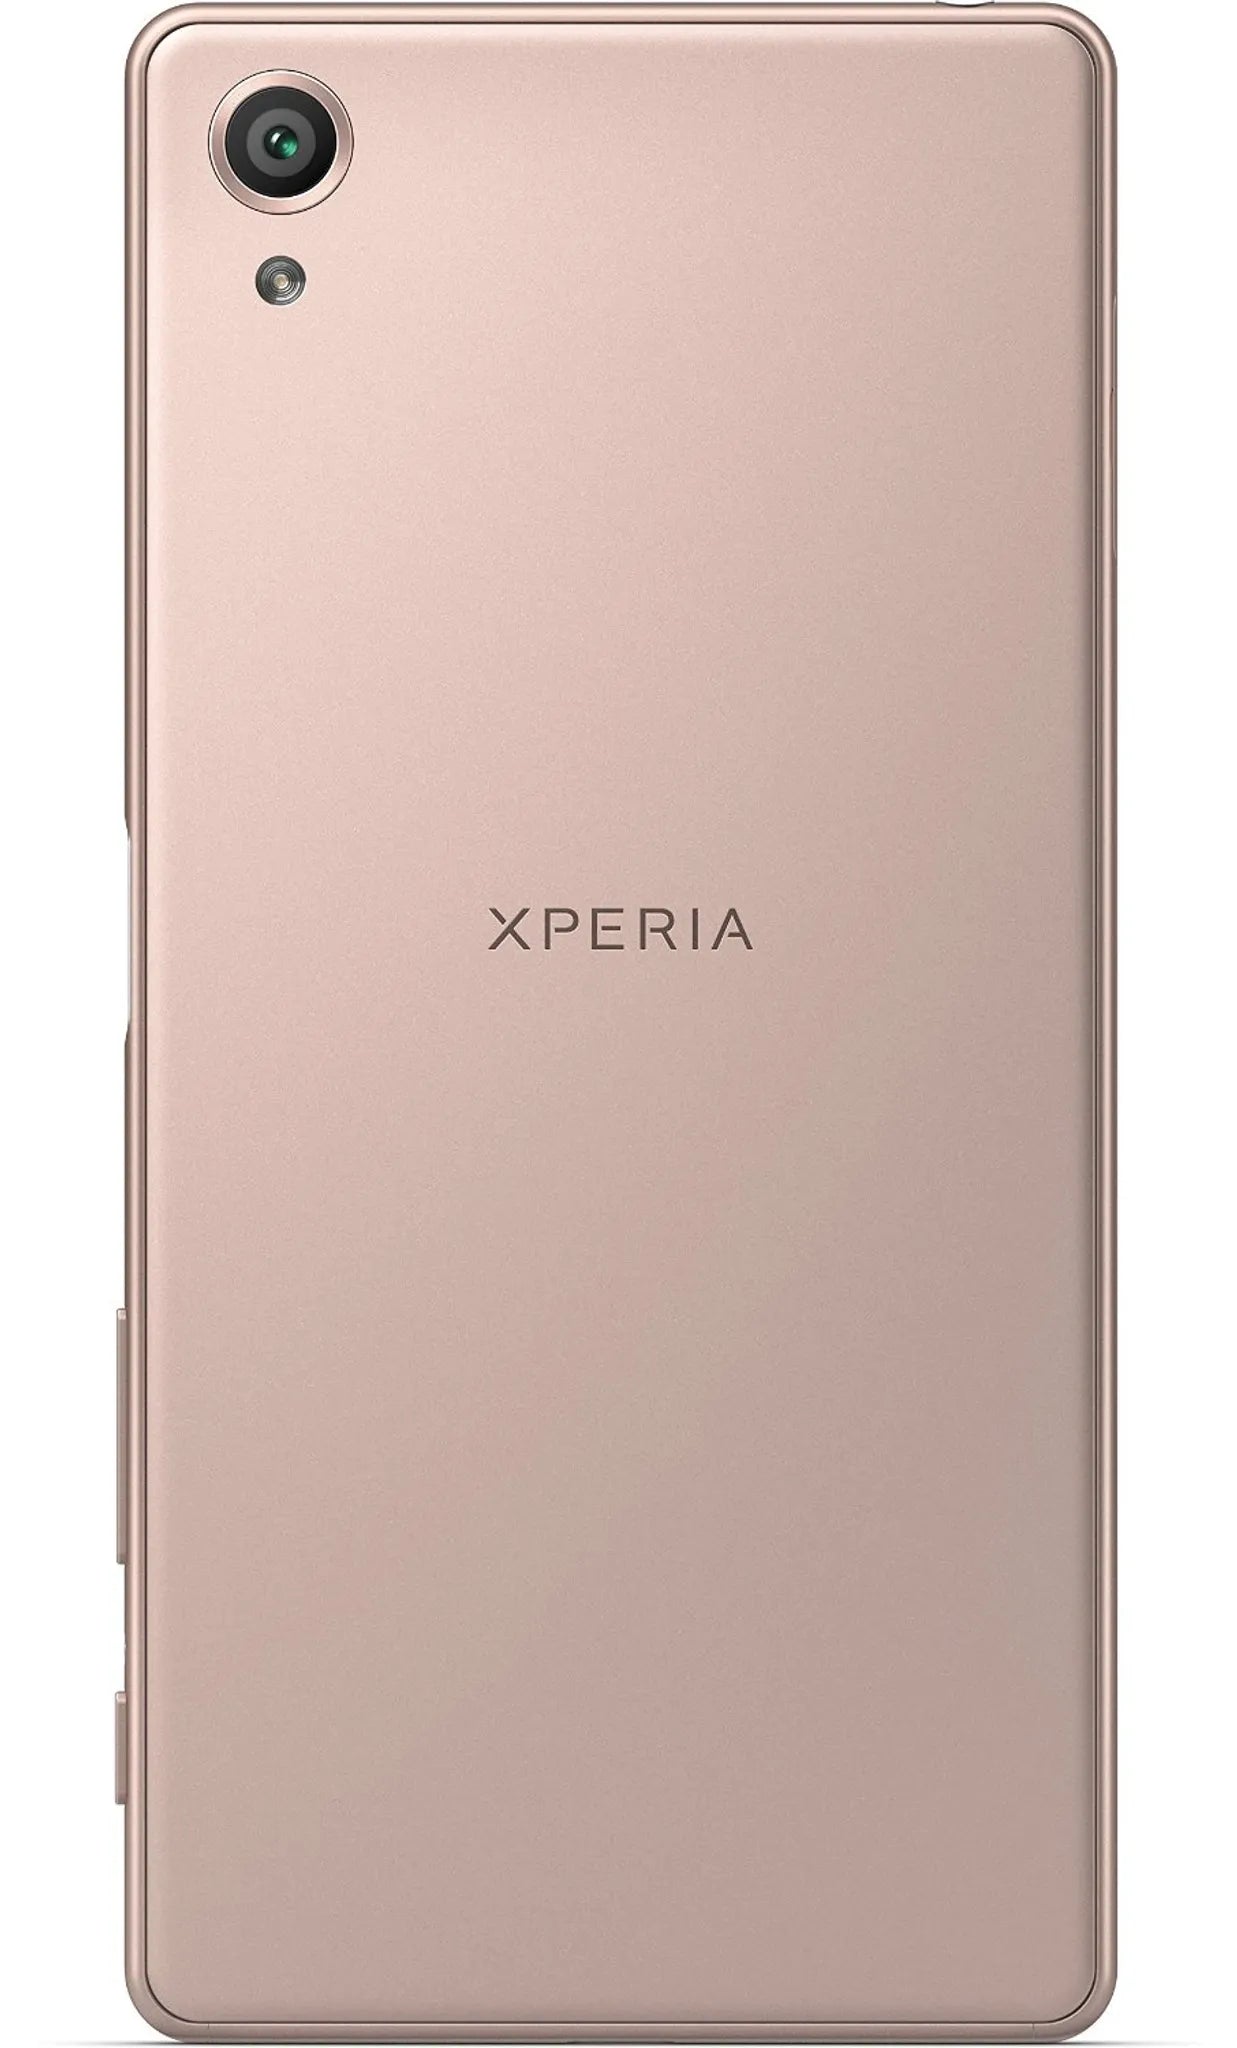 Sony Xperia X Single SIM Rose Gold